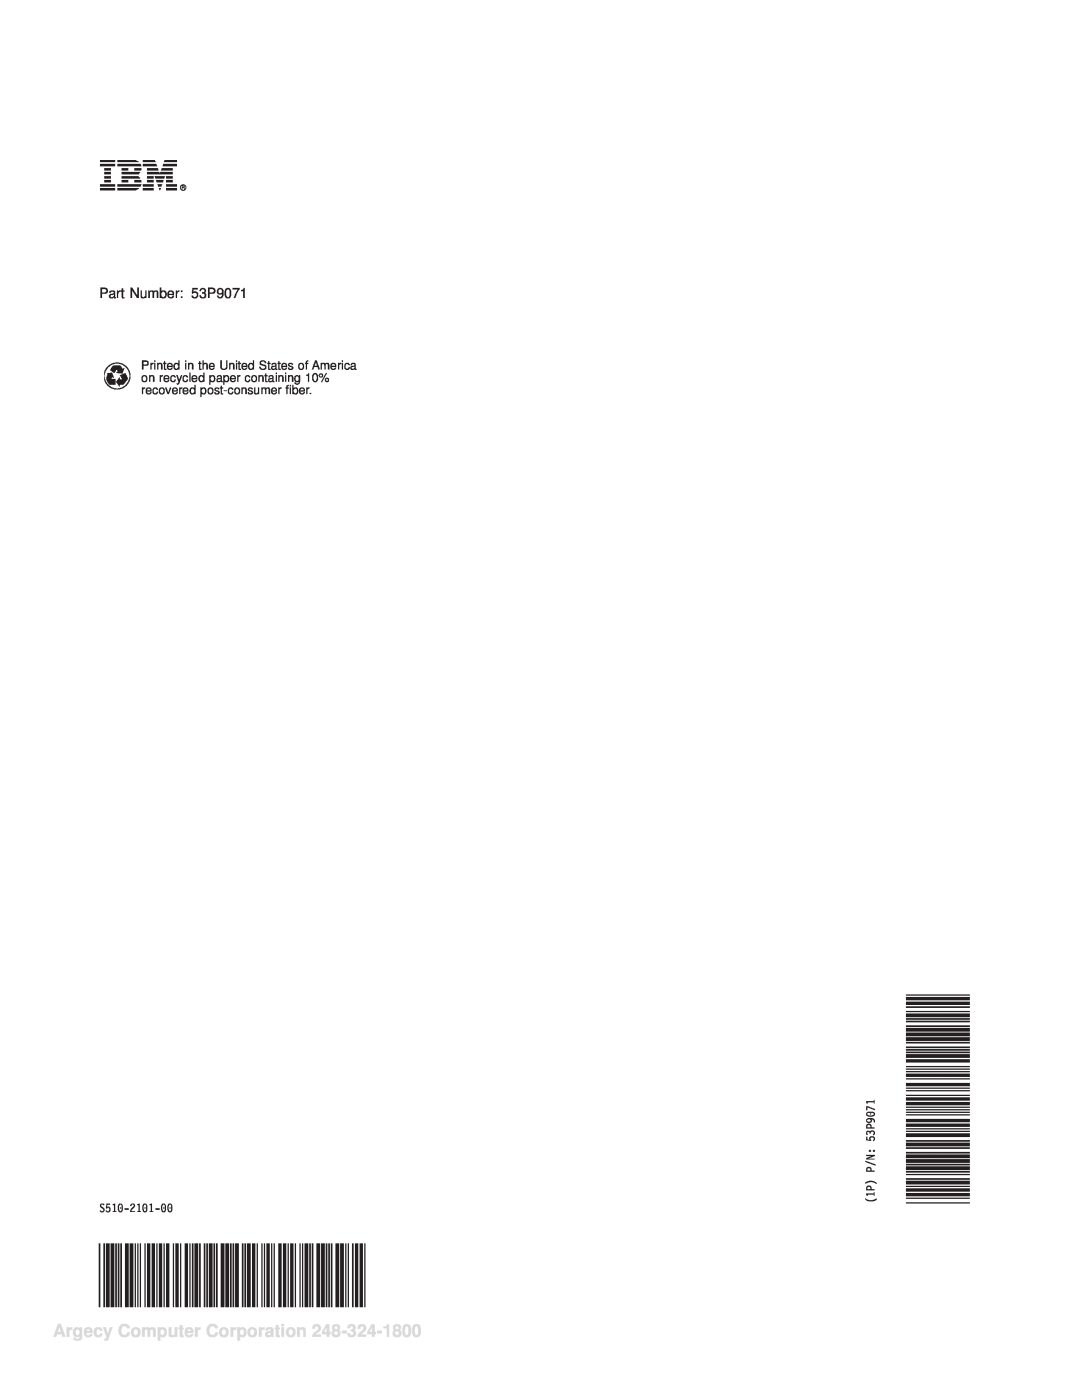 IBM 1120, 1125 manual Ibmr, Argecy Computer Corporation, Part Number 53P9071, S510-2101-00, 1P P/N 53P9071 